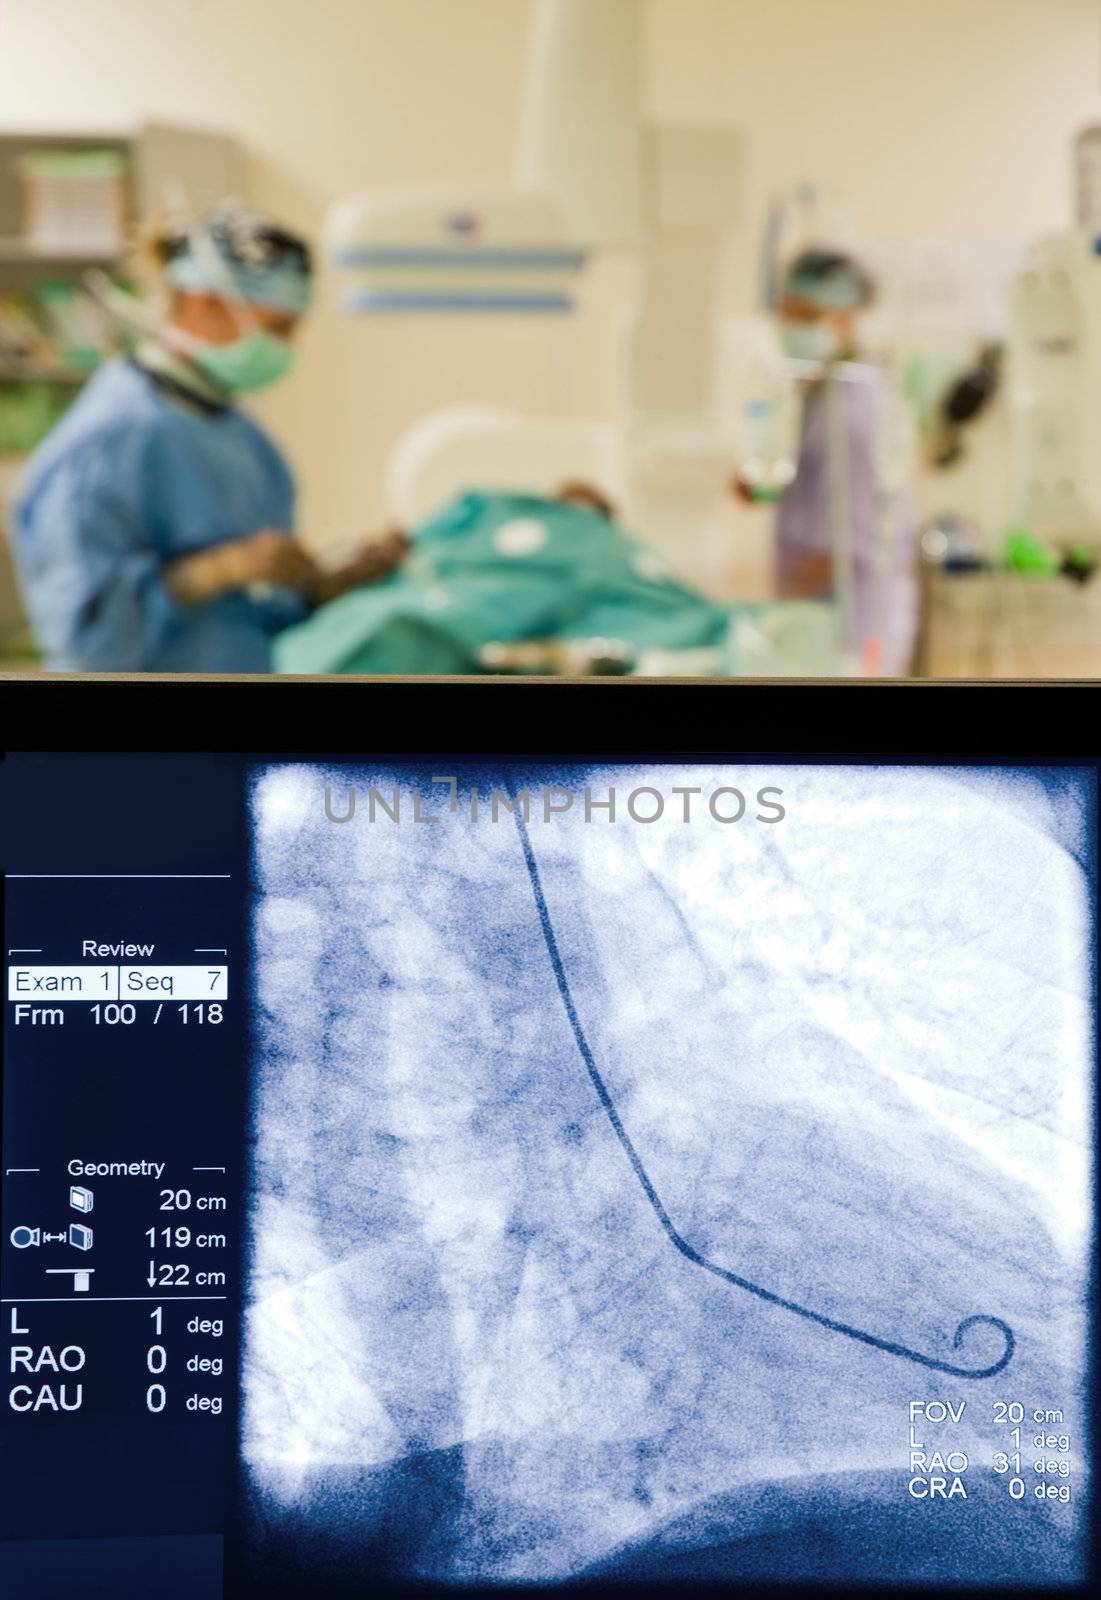 Medical team performng coronarography procedure, focus on x-ray screen